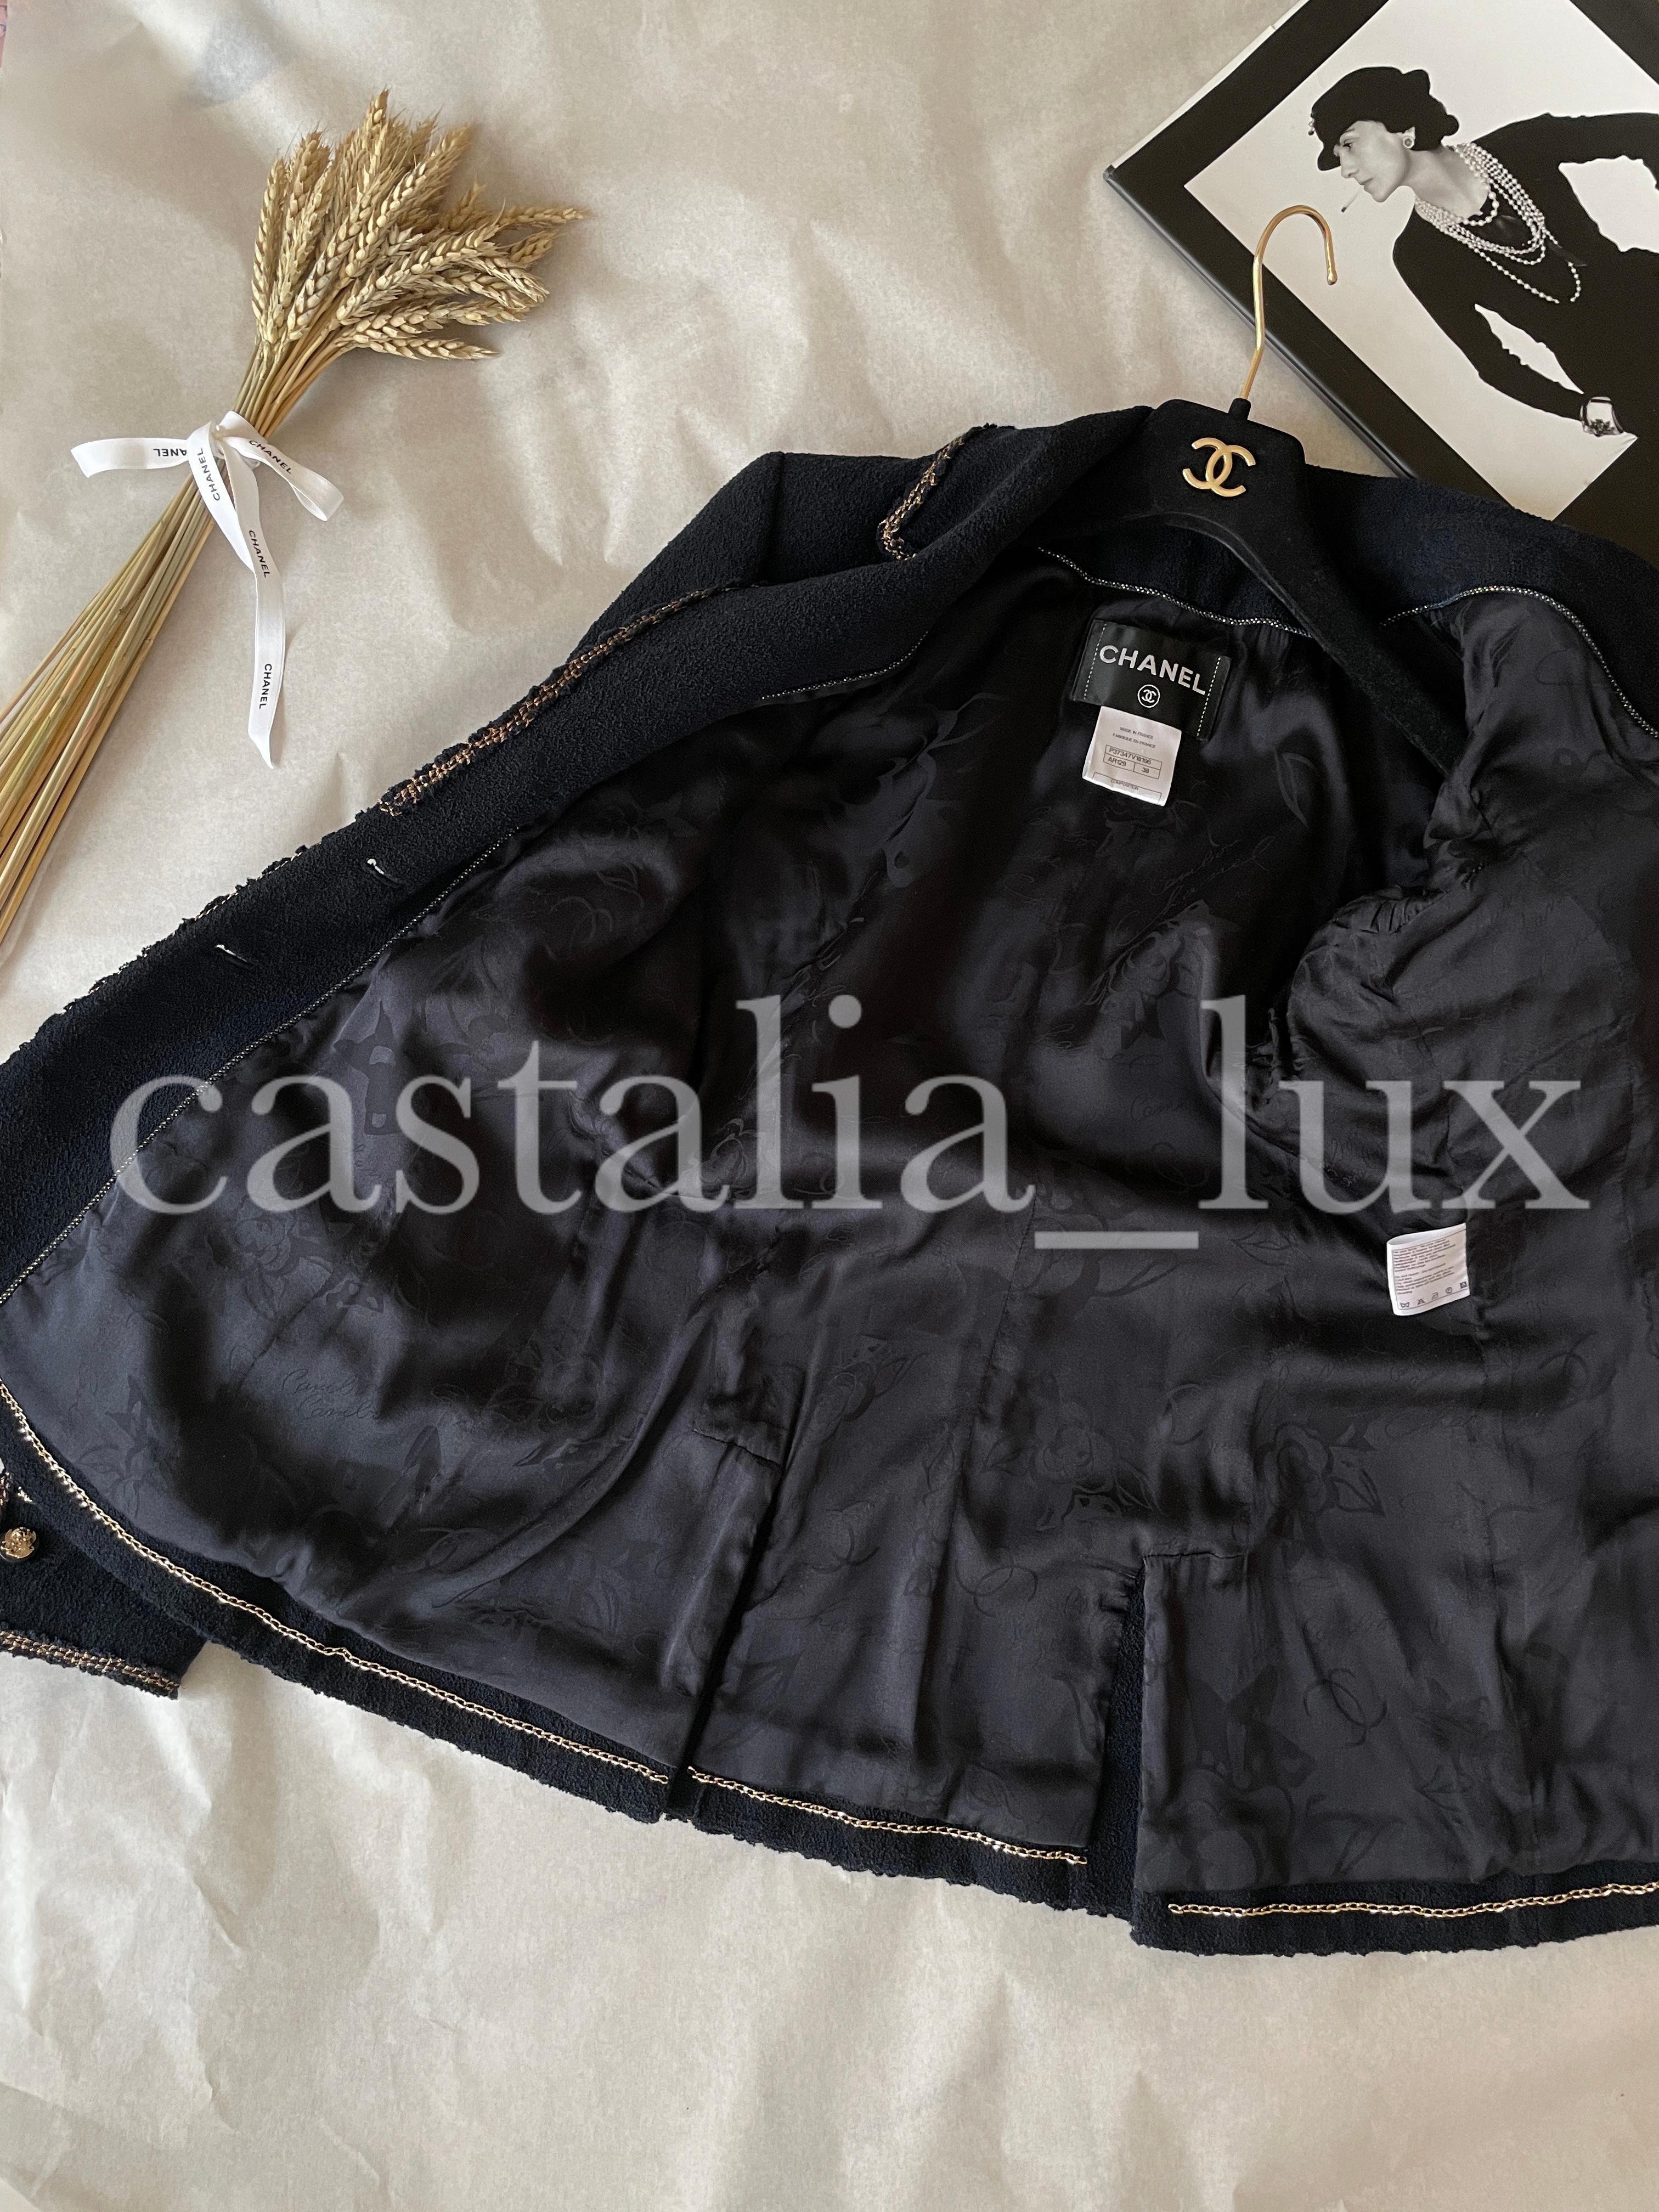 Chanel Iconic Paris / Venice Little Tweed Jacket For Sale 6